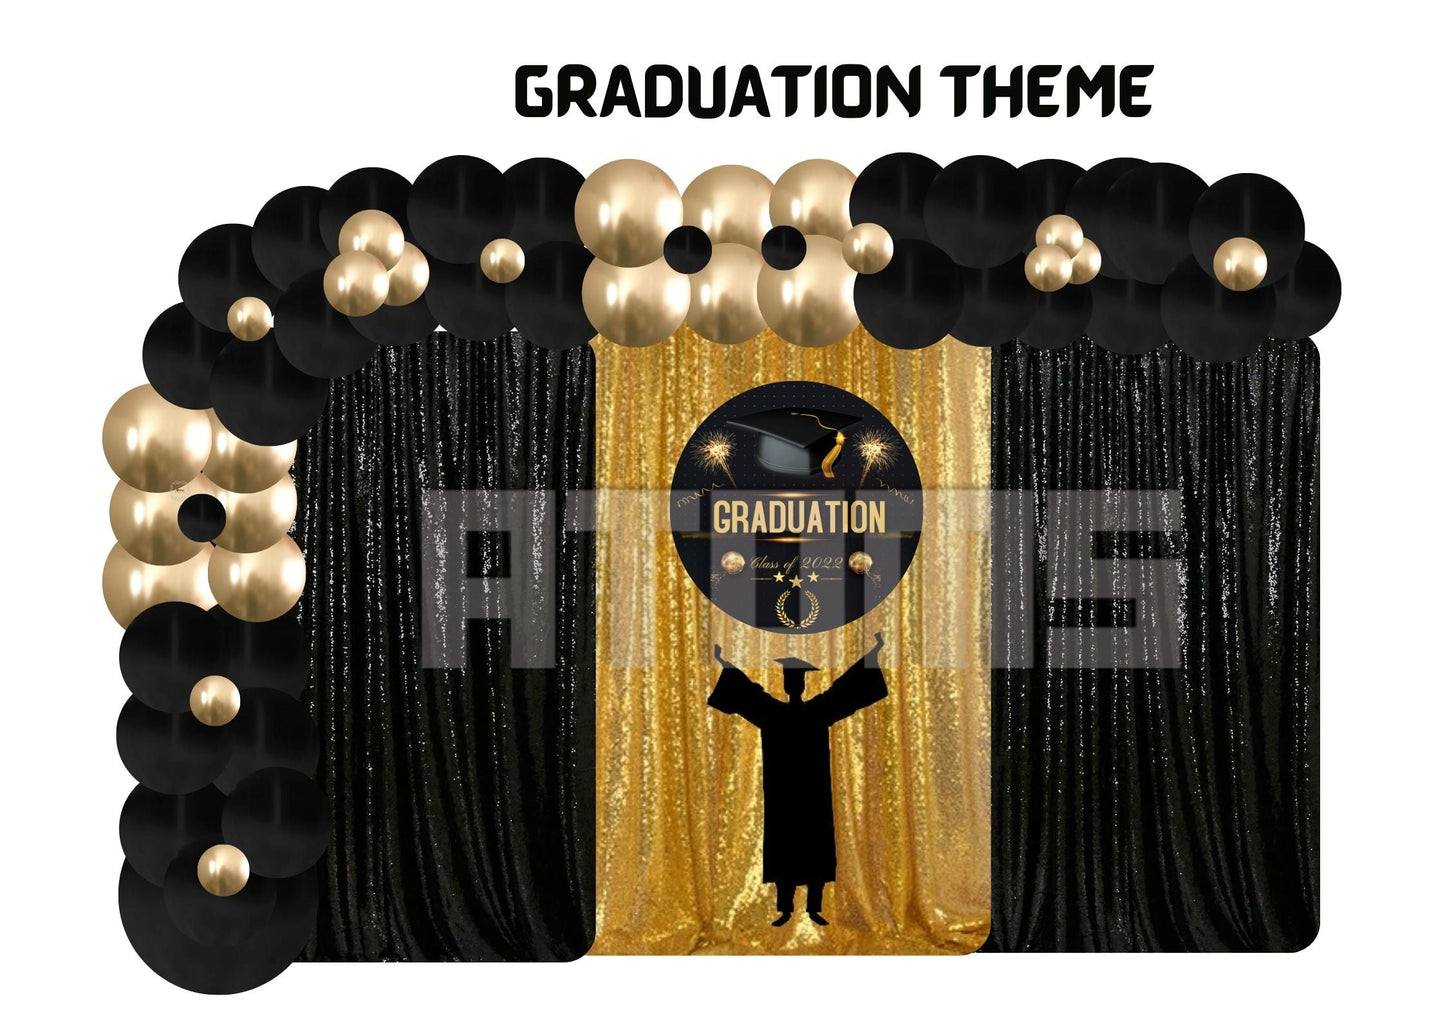 Pink Theme Graduation Curtains Setup